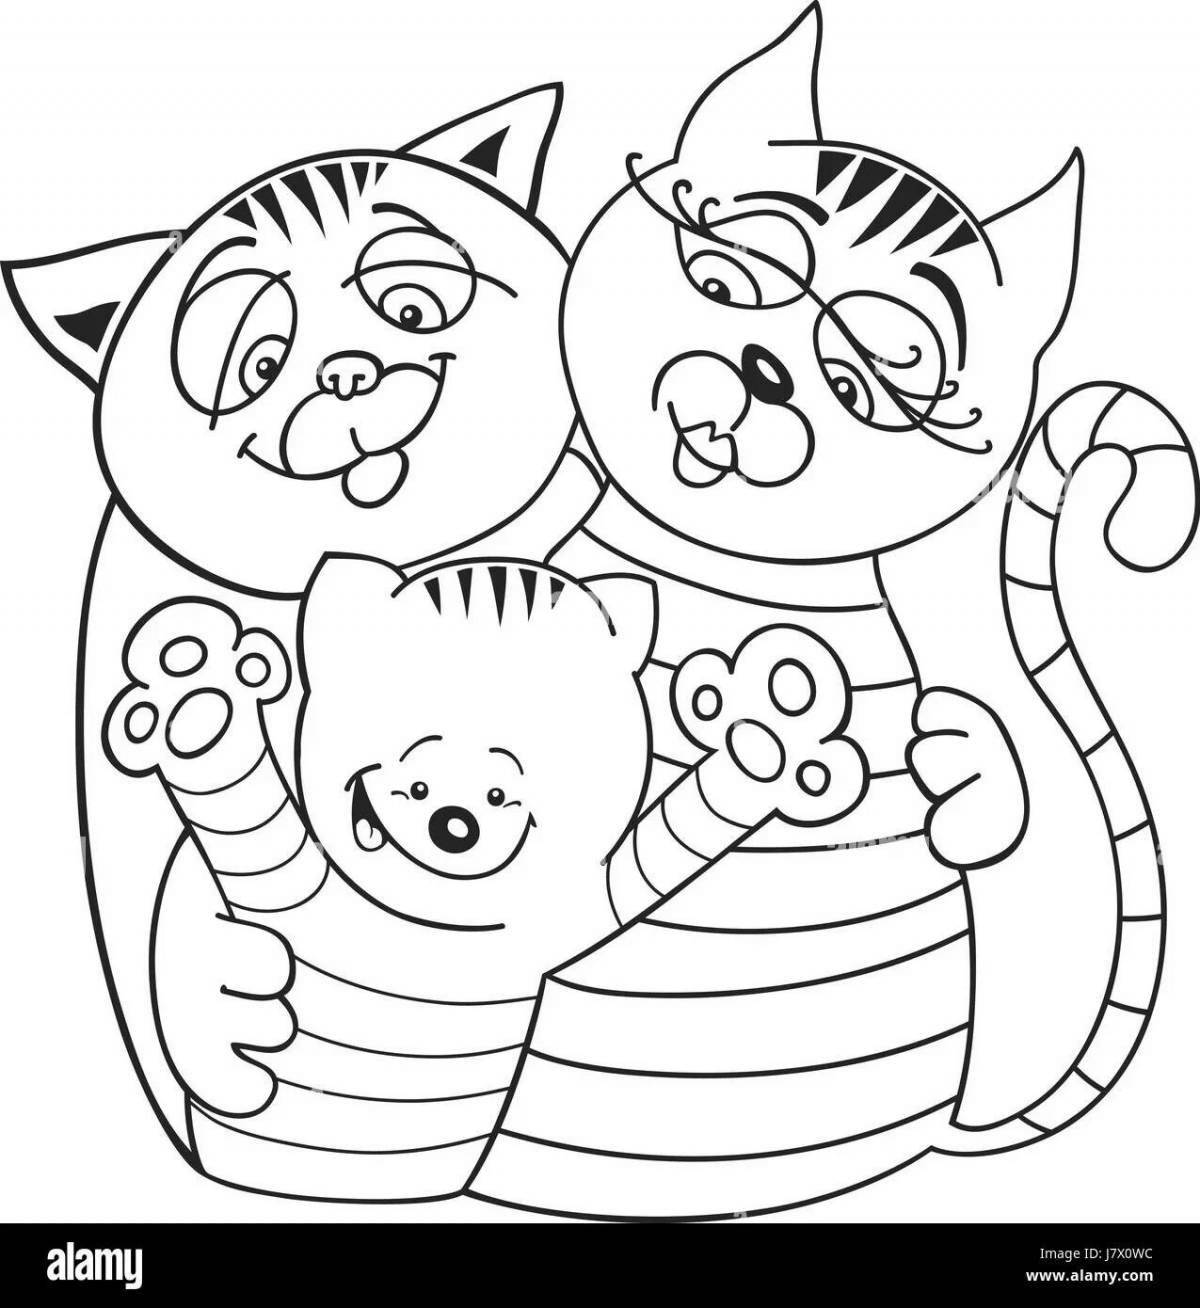 Coloring cat family joyful moment